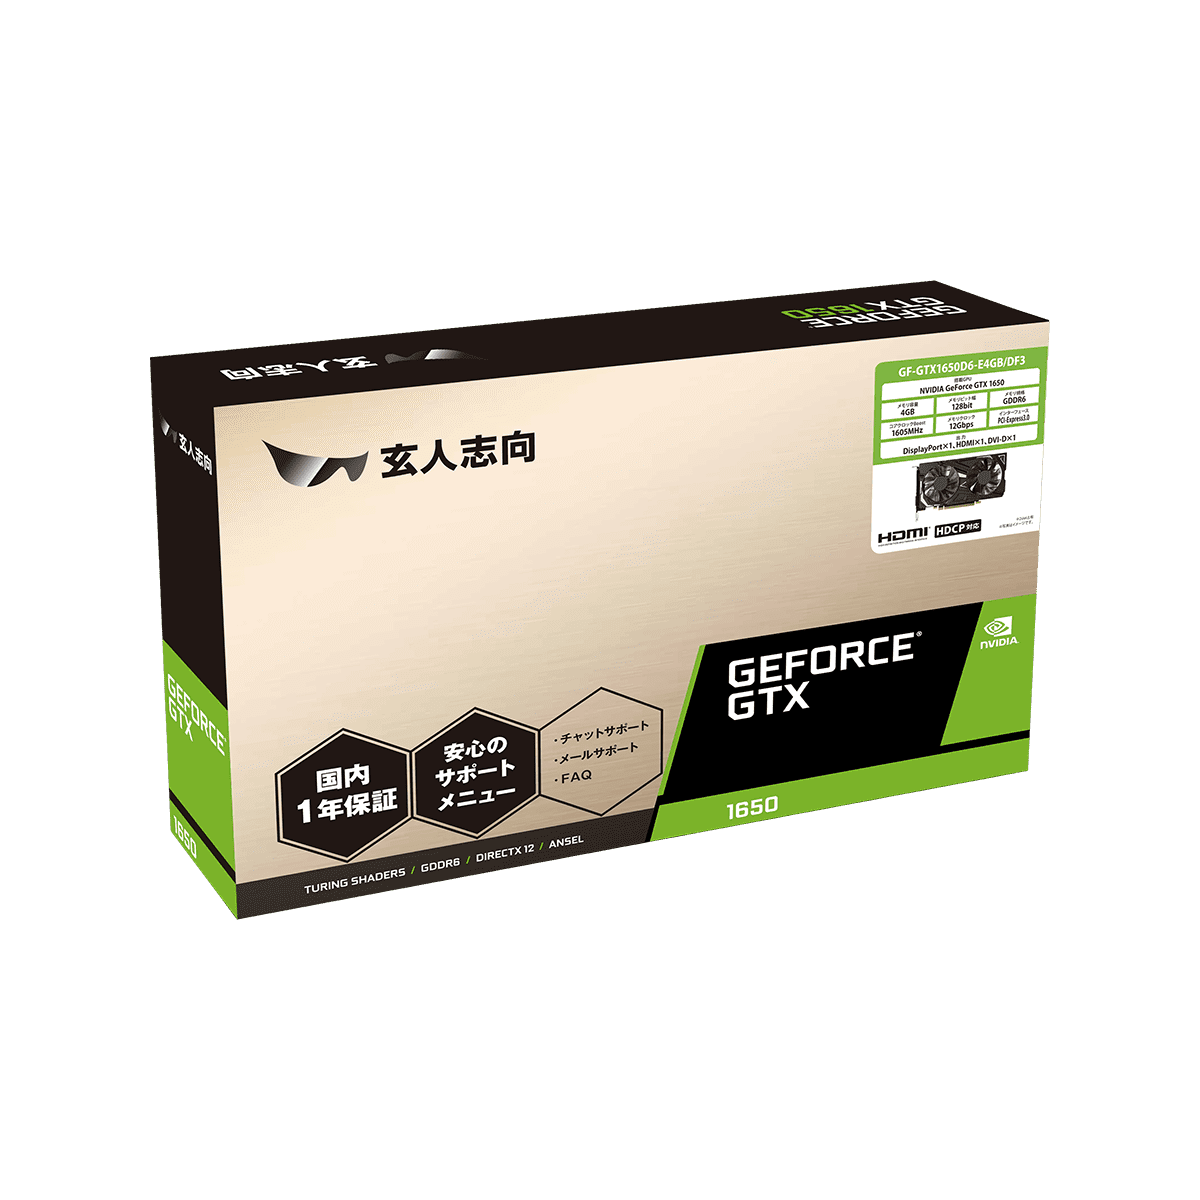 PC/タブレット PCパーツ GF-GTX1650D6-E4GB/DF3 | NVIDIA GEFORCE GTX 1650 搭載 PCI-Express 